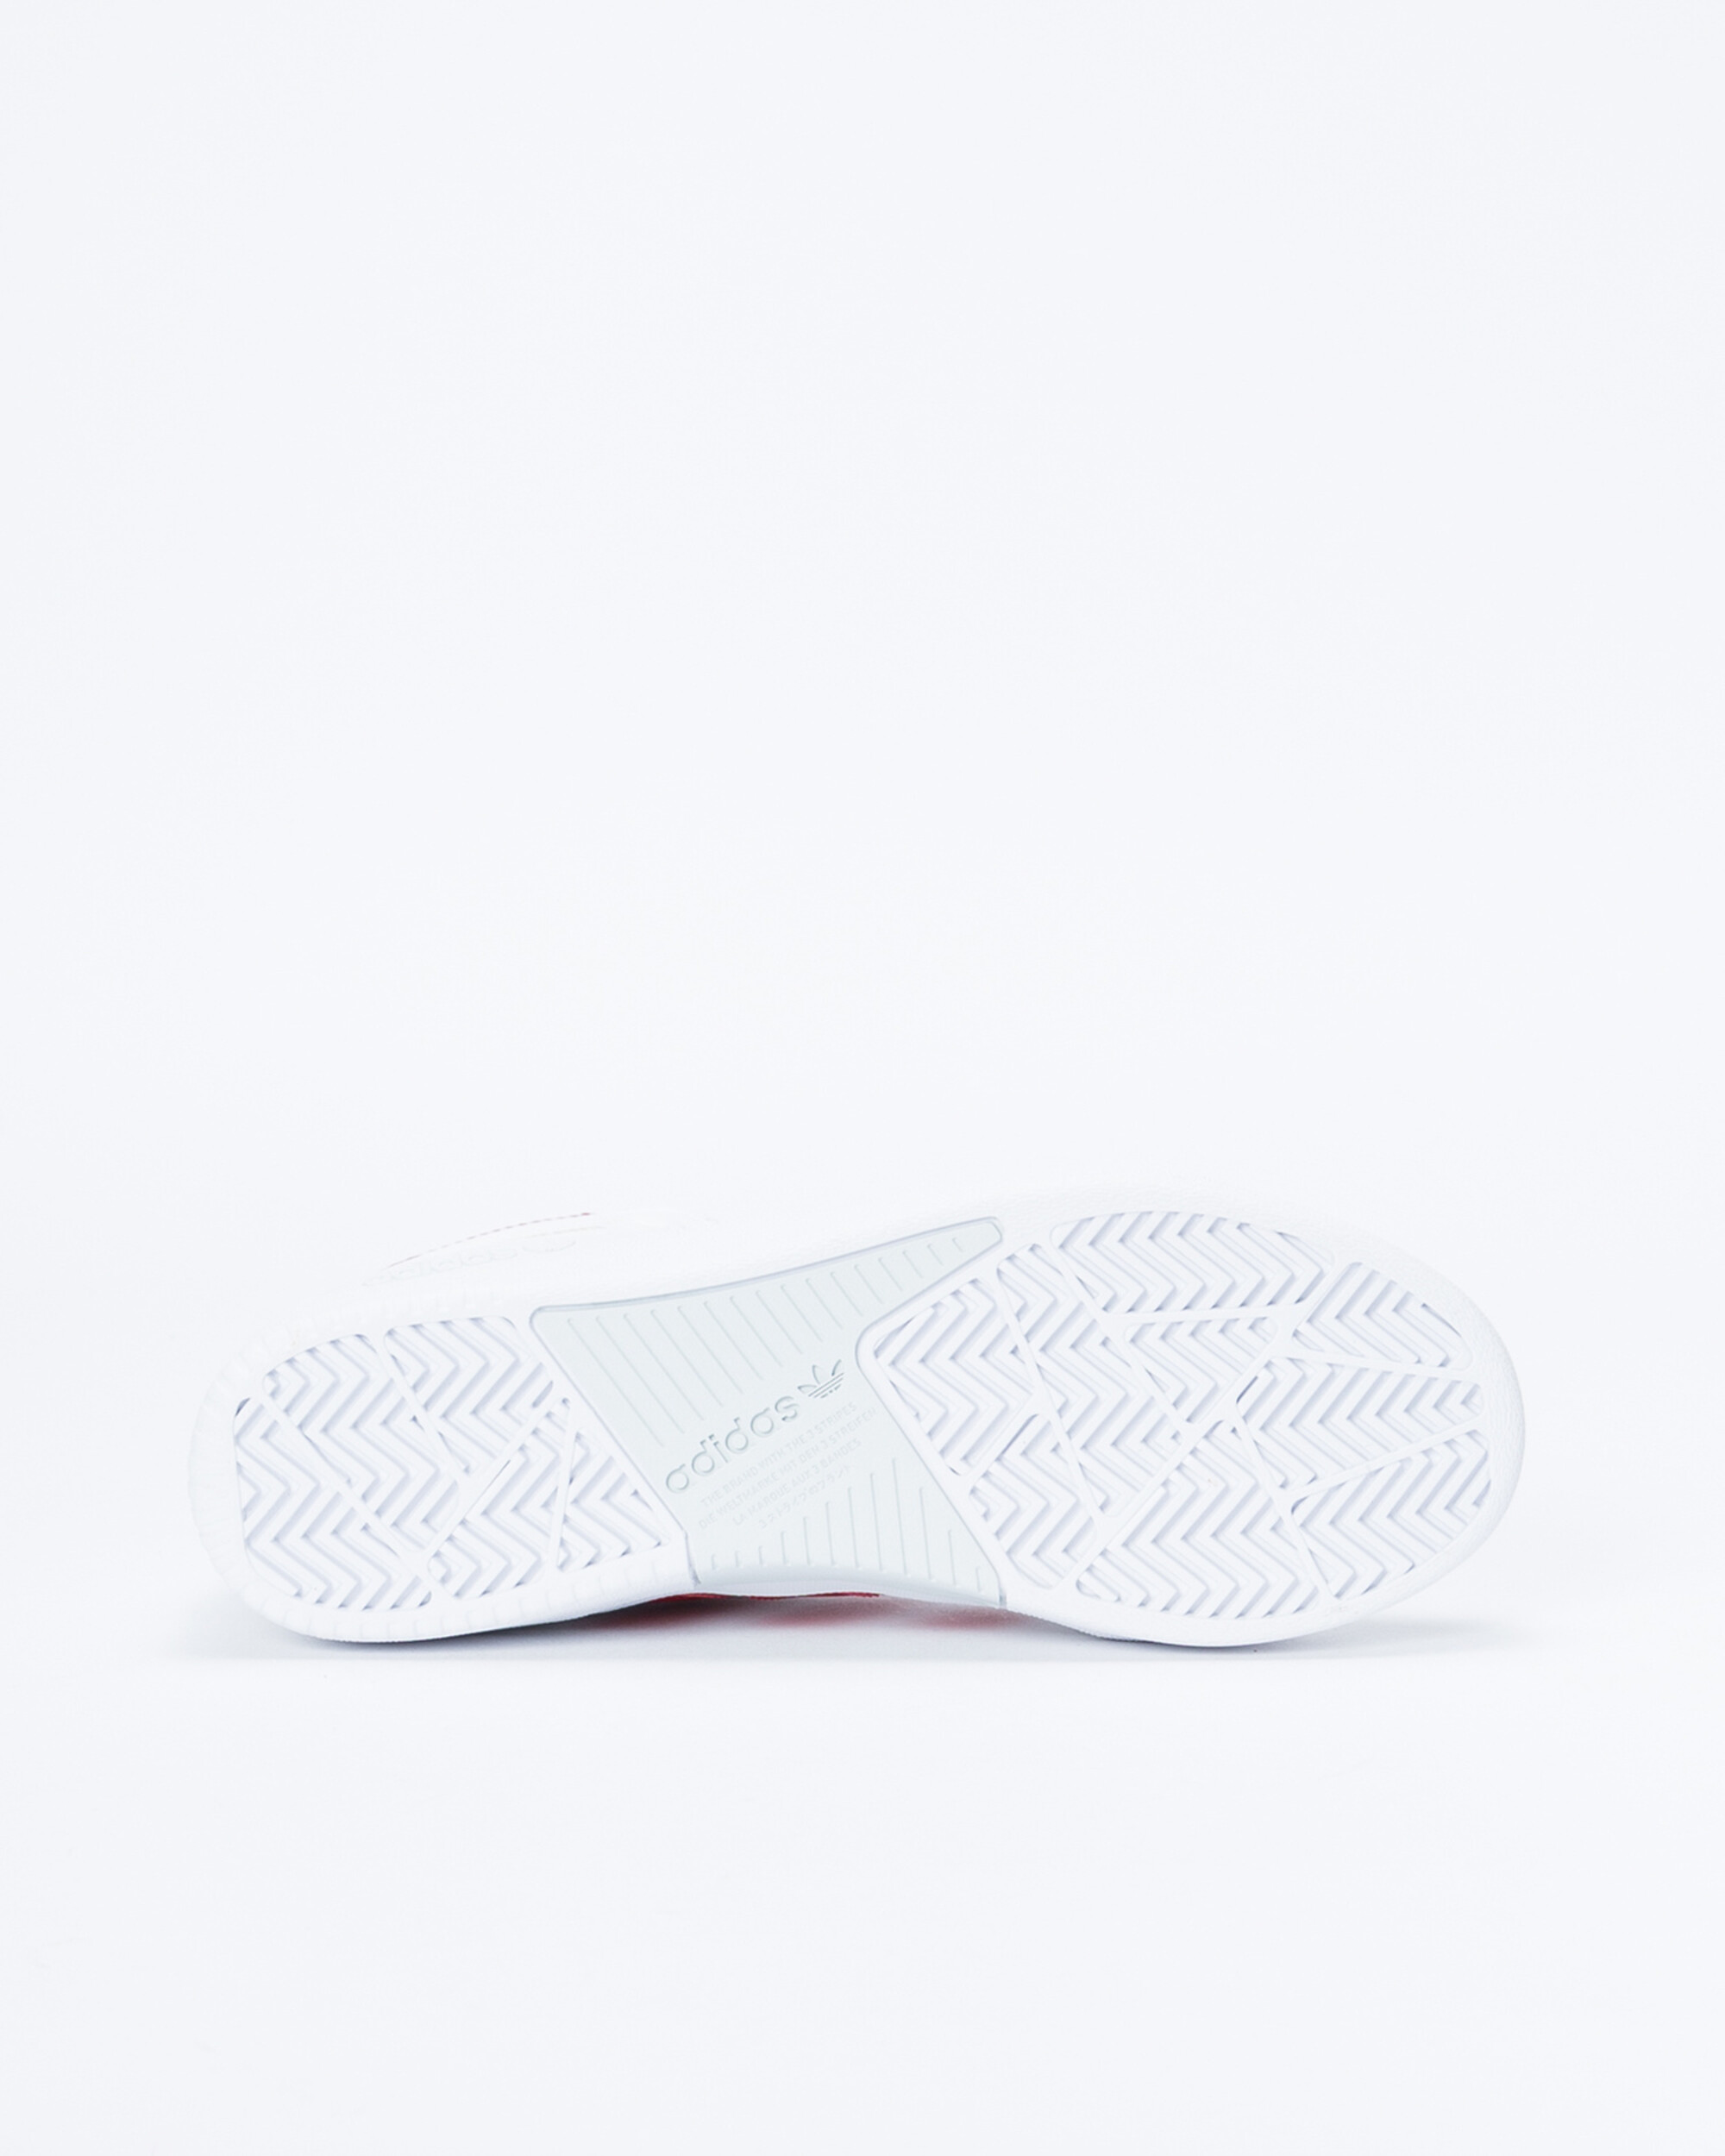 Adidas Tyshawn Footwear White/Scarlet/Footwear White